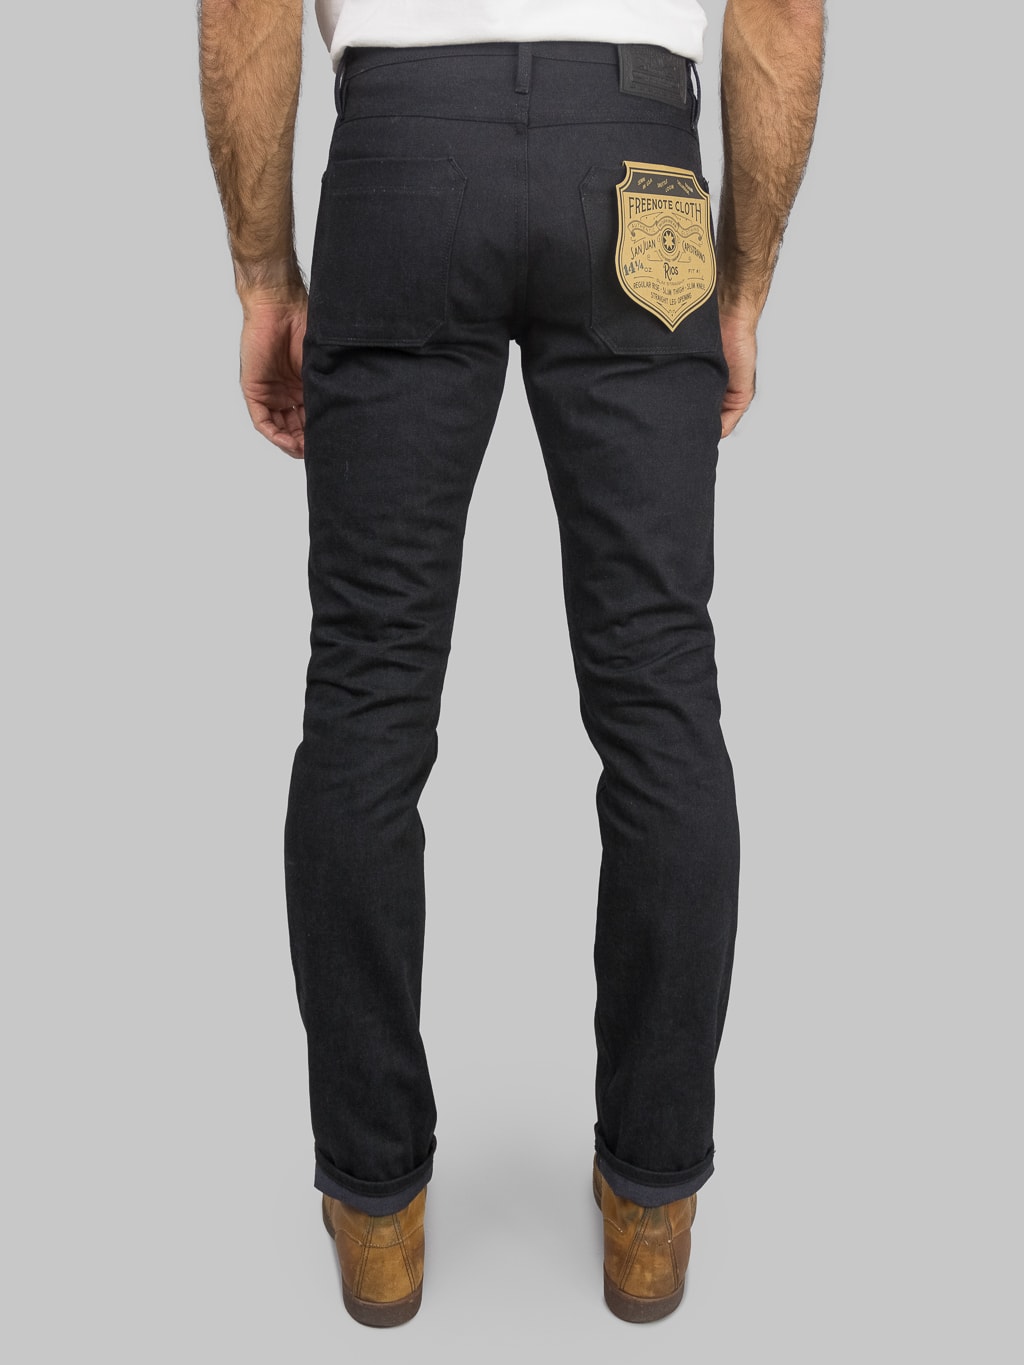 Freenote Cloth Rios Black Grey Japanese Denim Slim Straight Jeans back fit